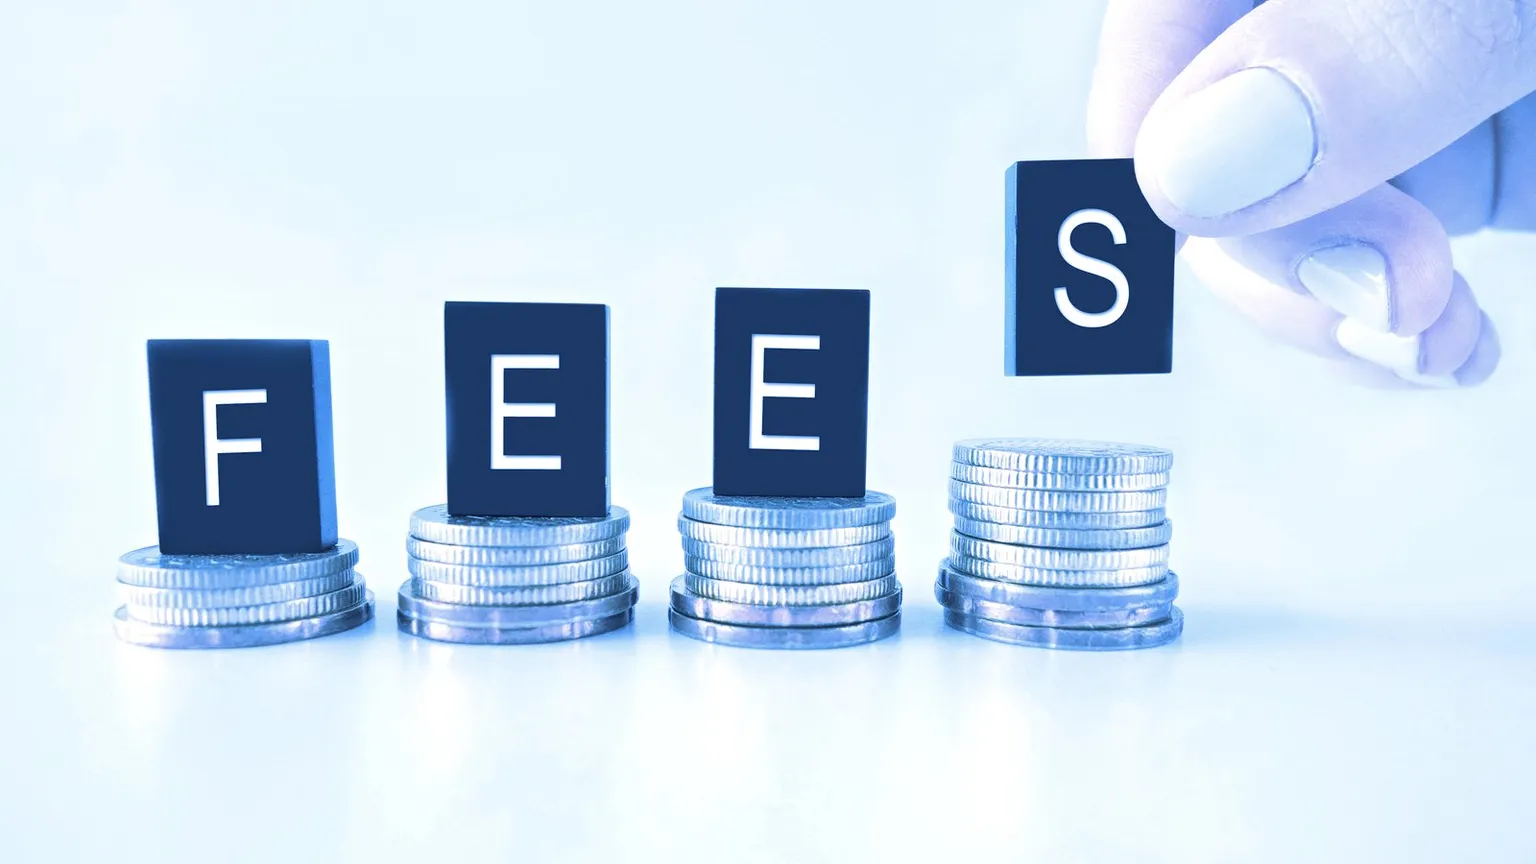 Transaction fees. Image: Shutterstock